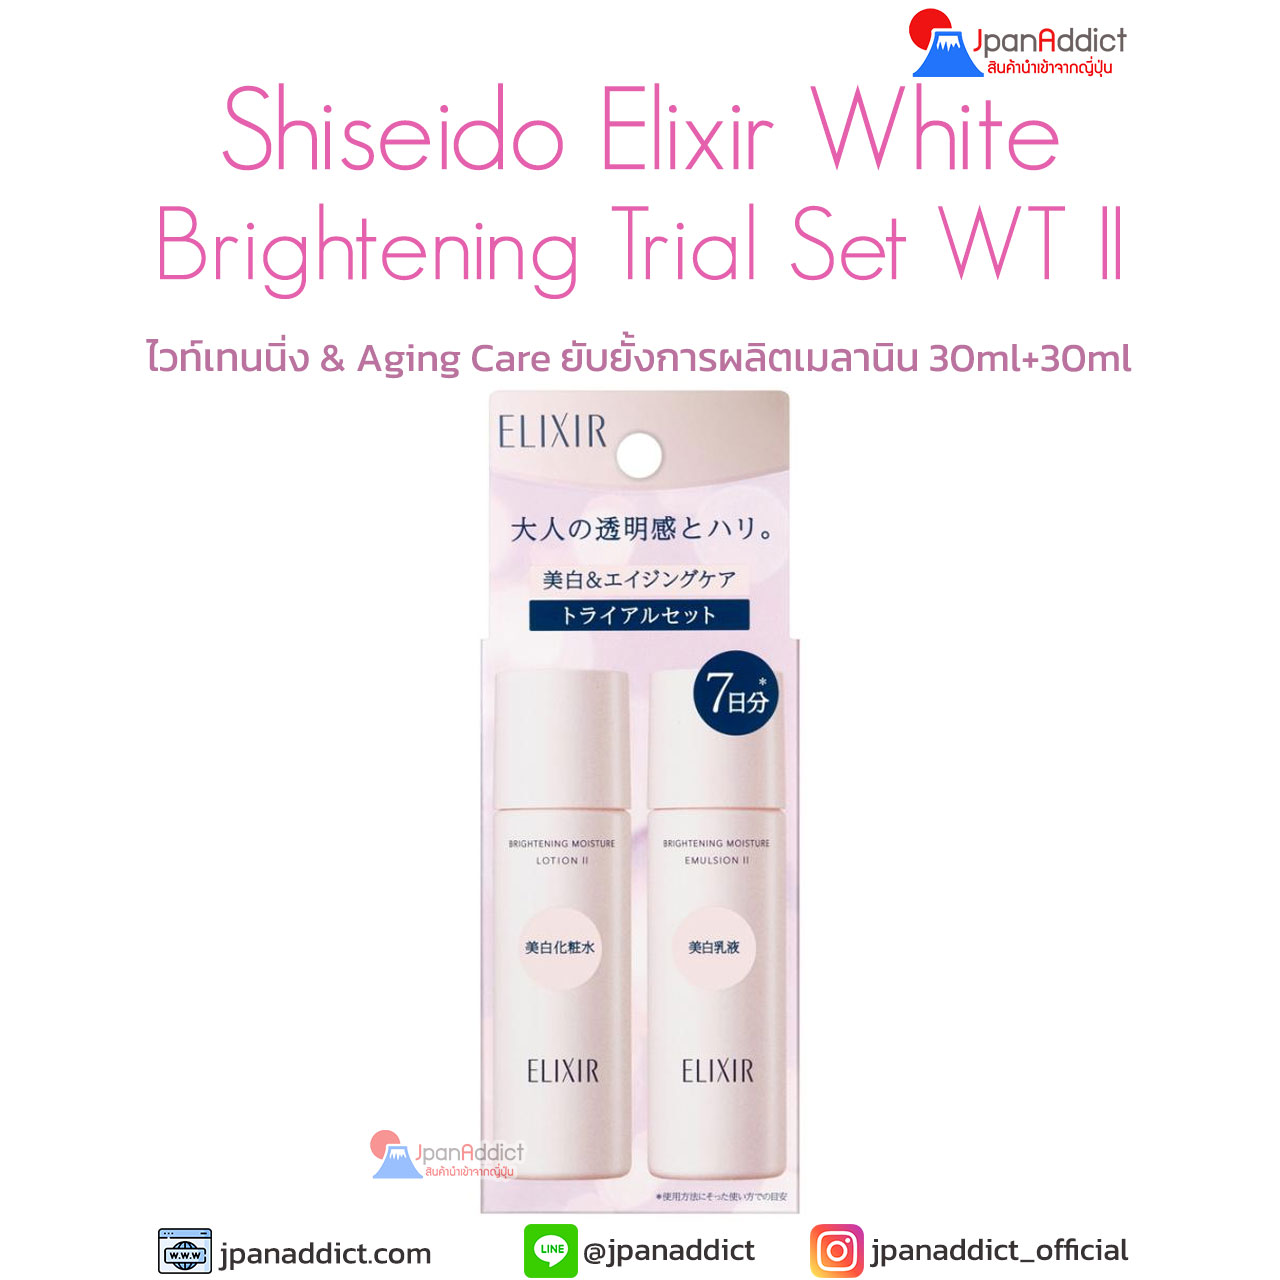 Shiseido Elixir White Brightening Trial Set WT II